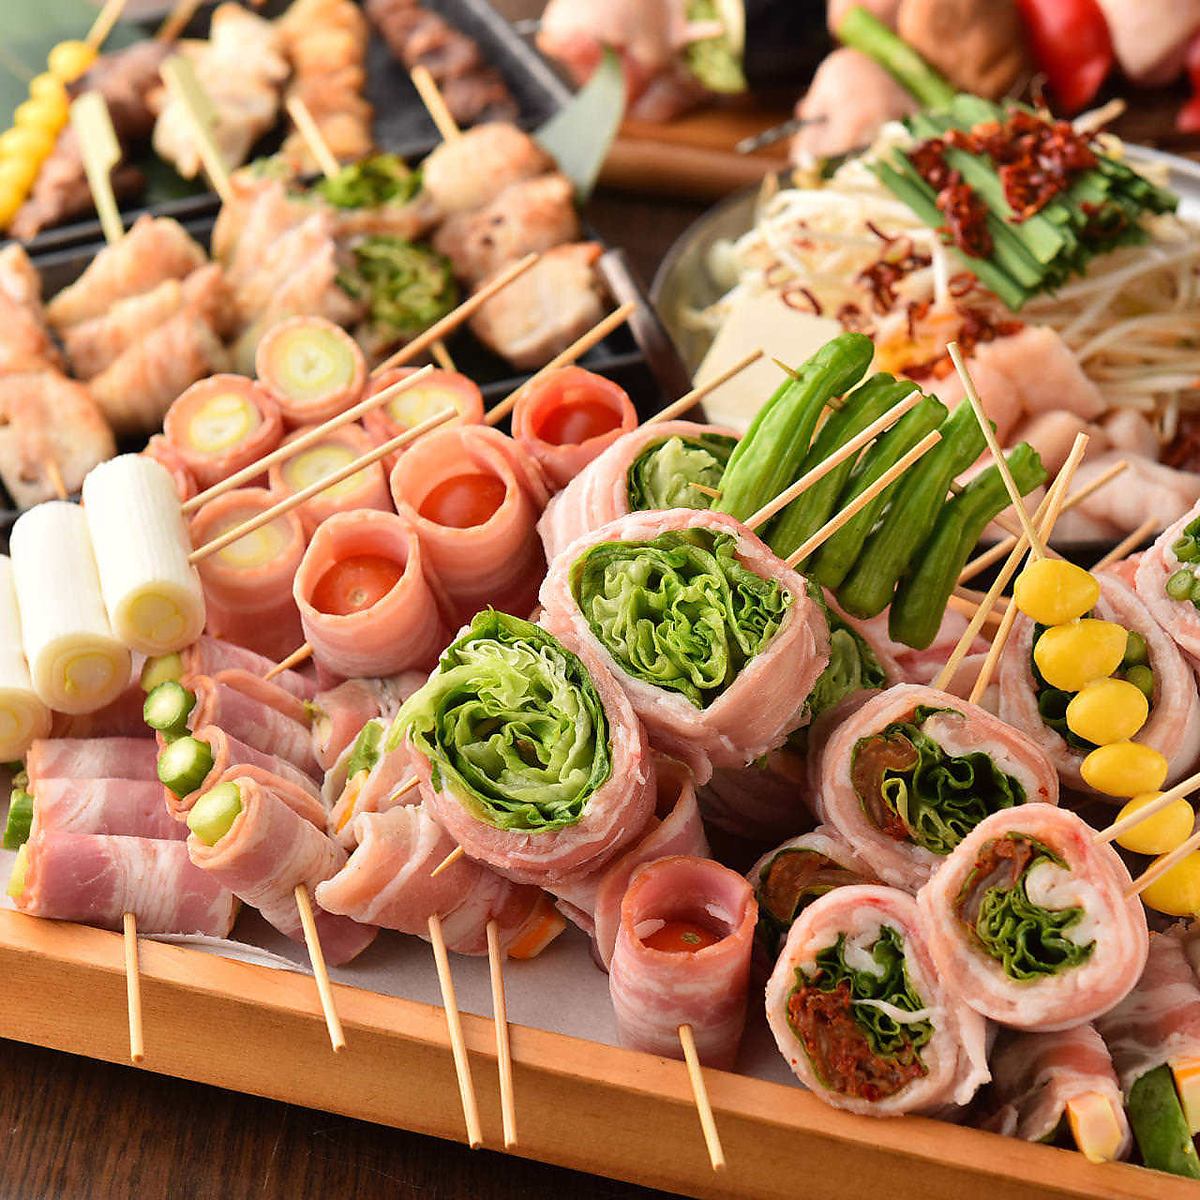 "All-you-can-eat selected yakitori, Hakata kushiyaki, etc.